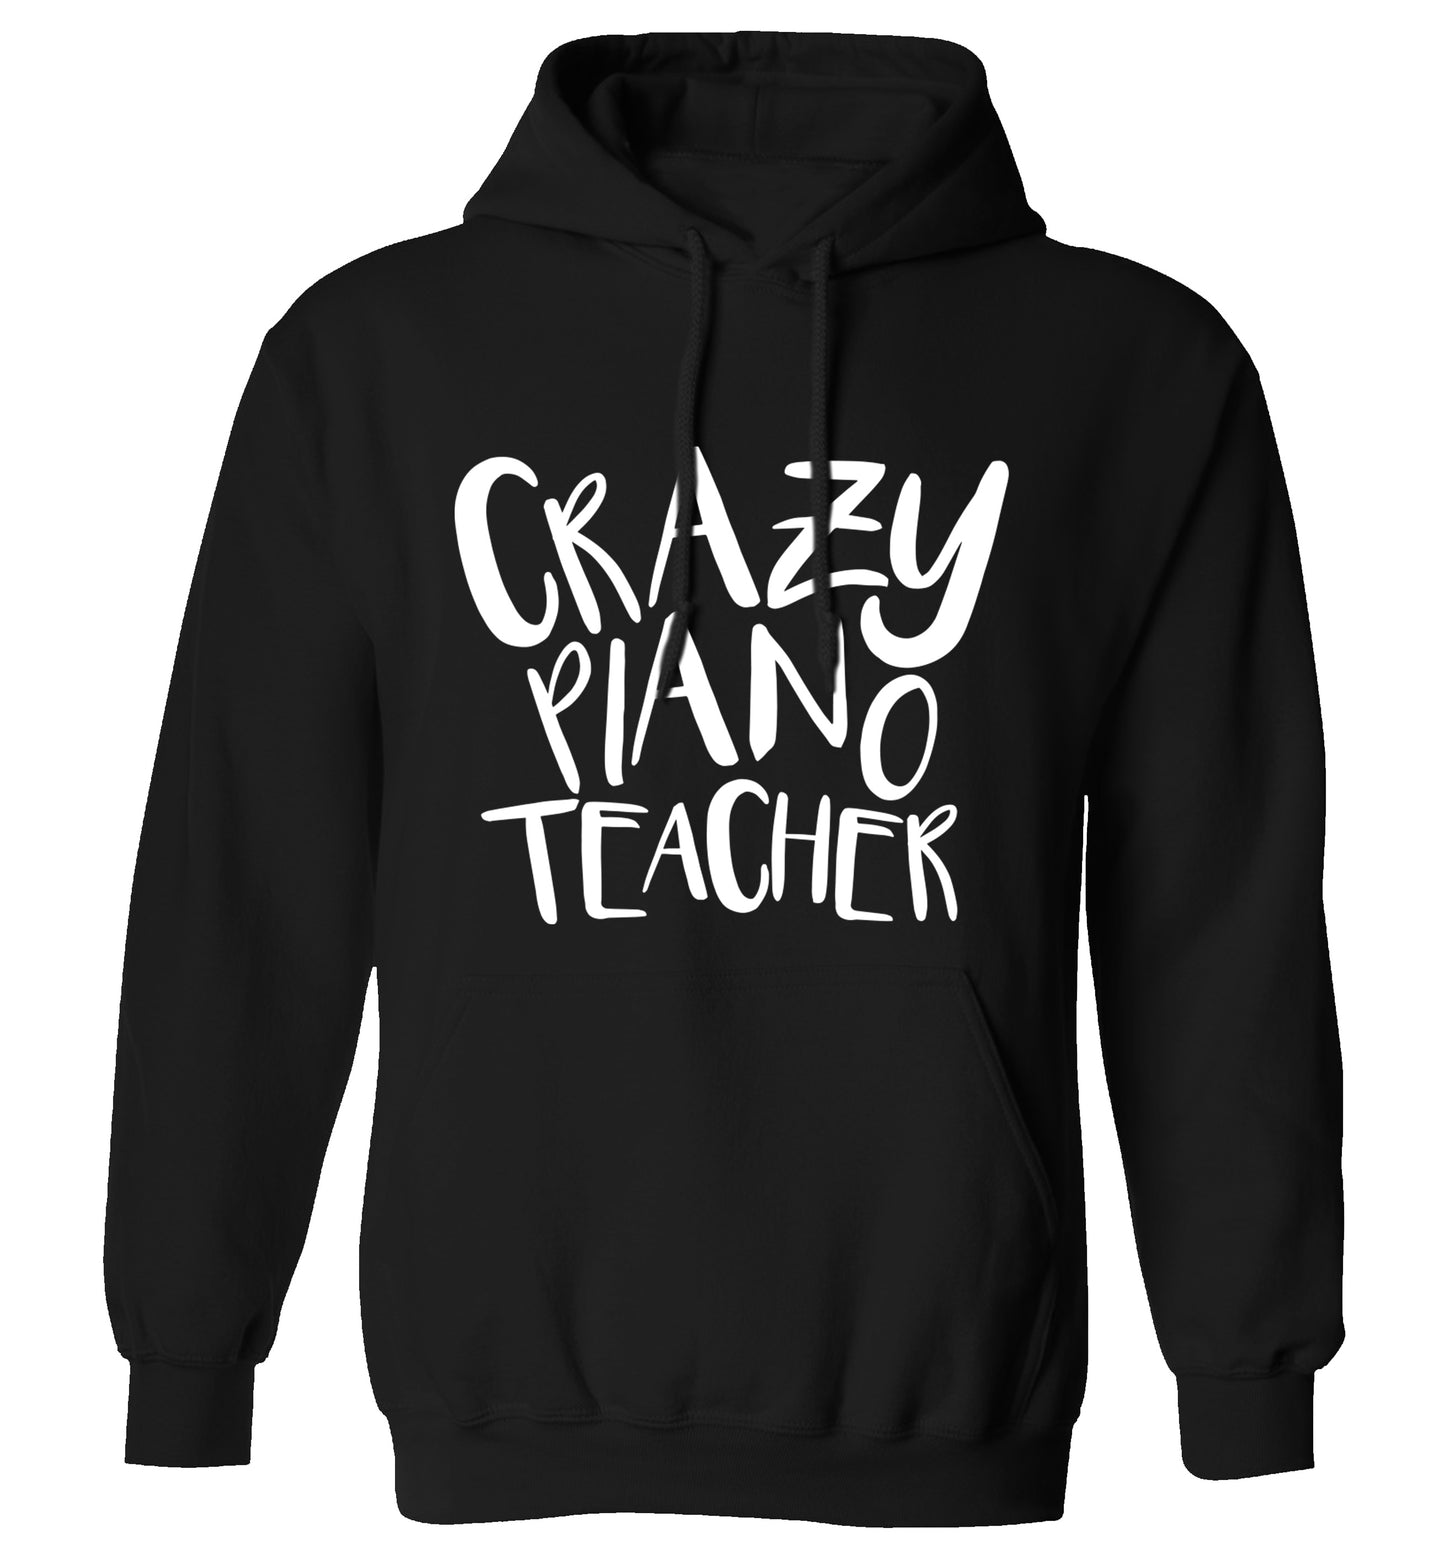 Crazy piano teacher adults unisex black hoodie 2XL